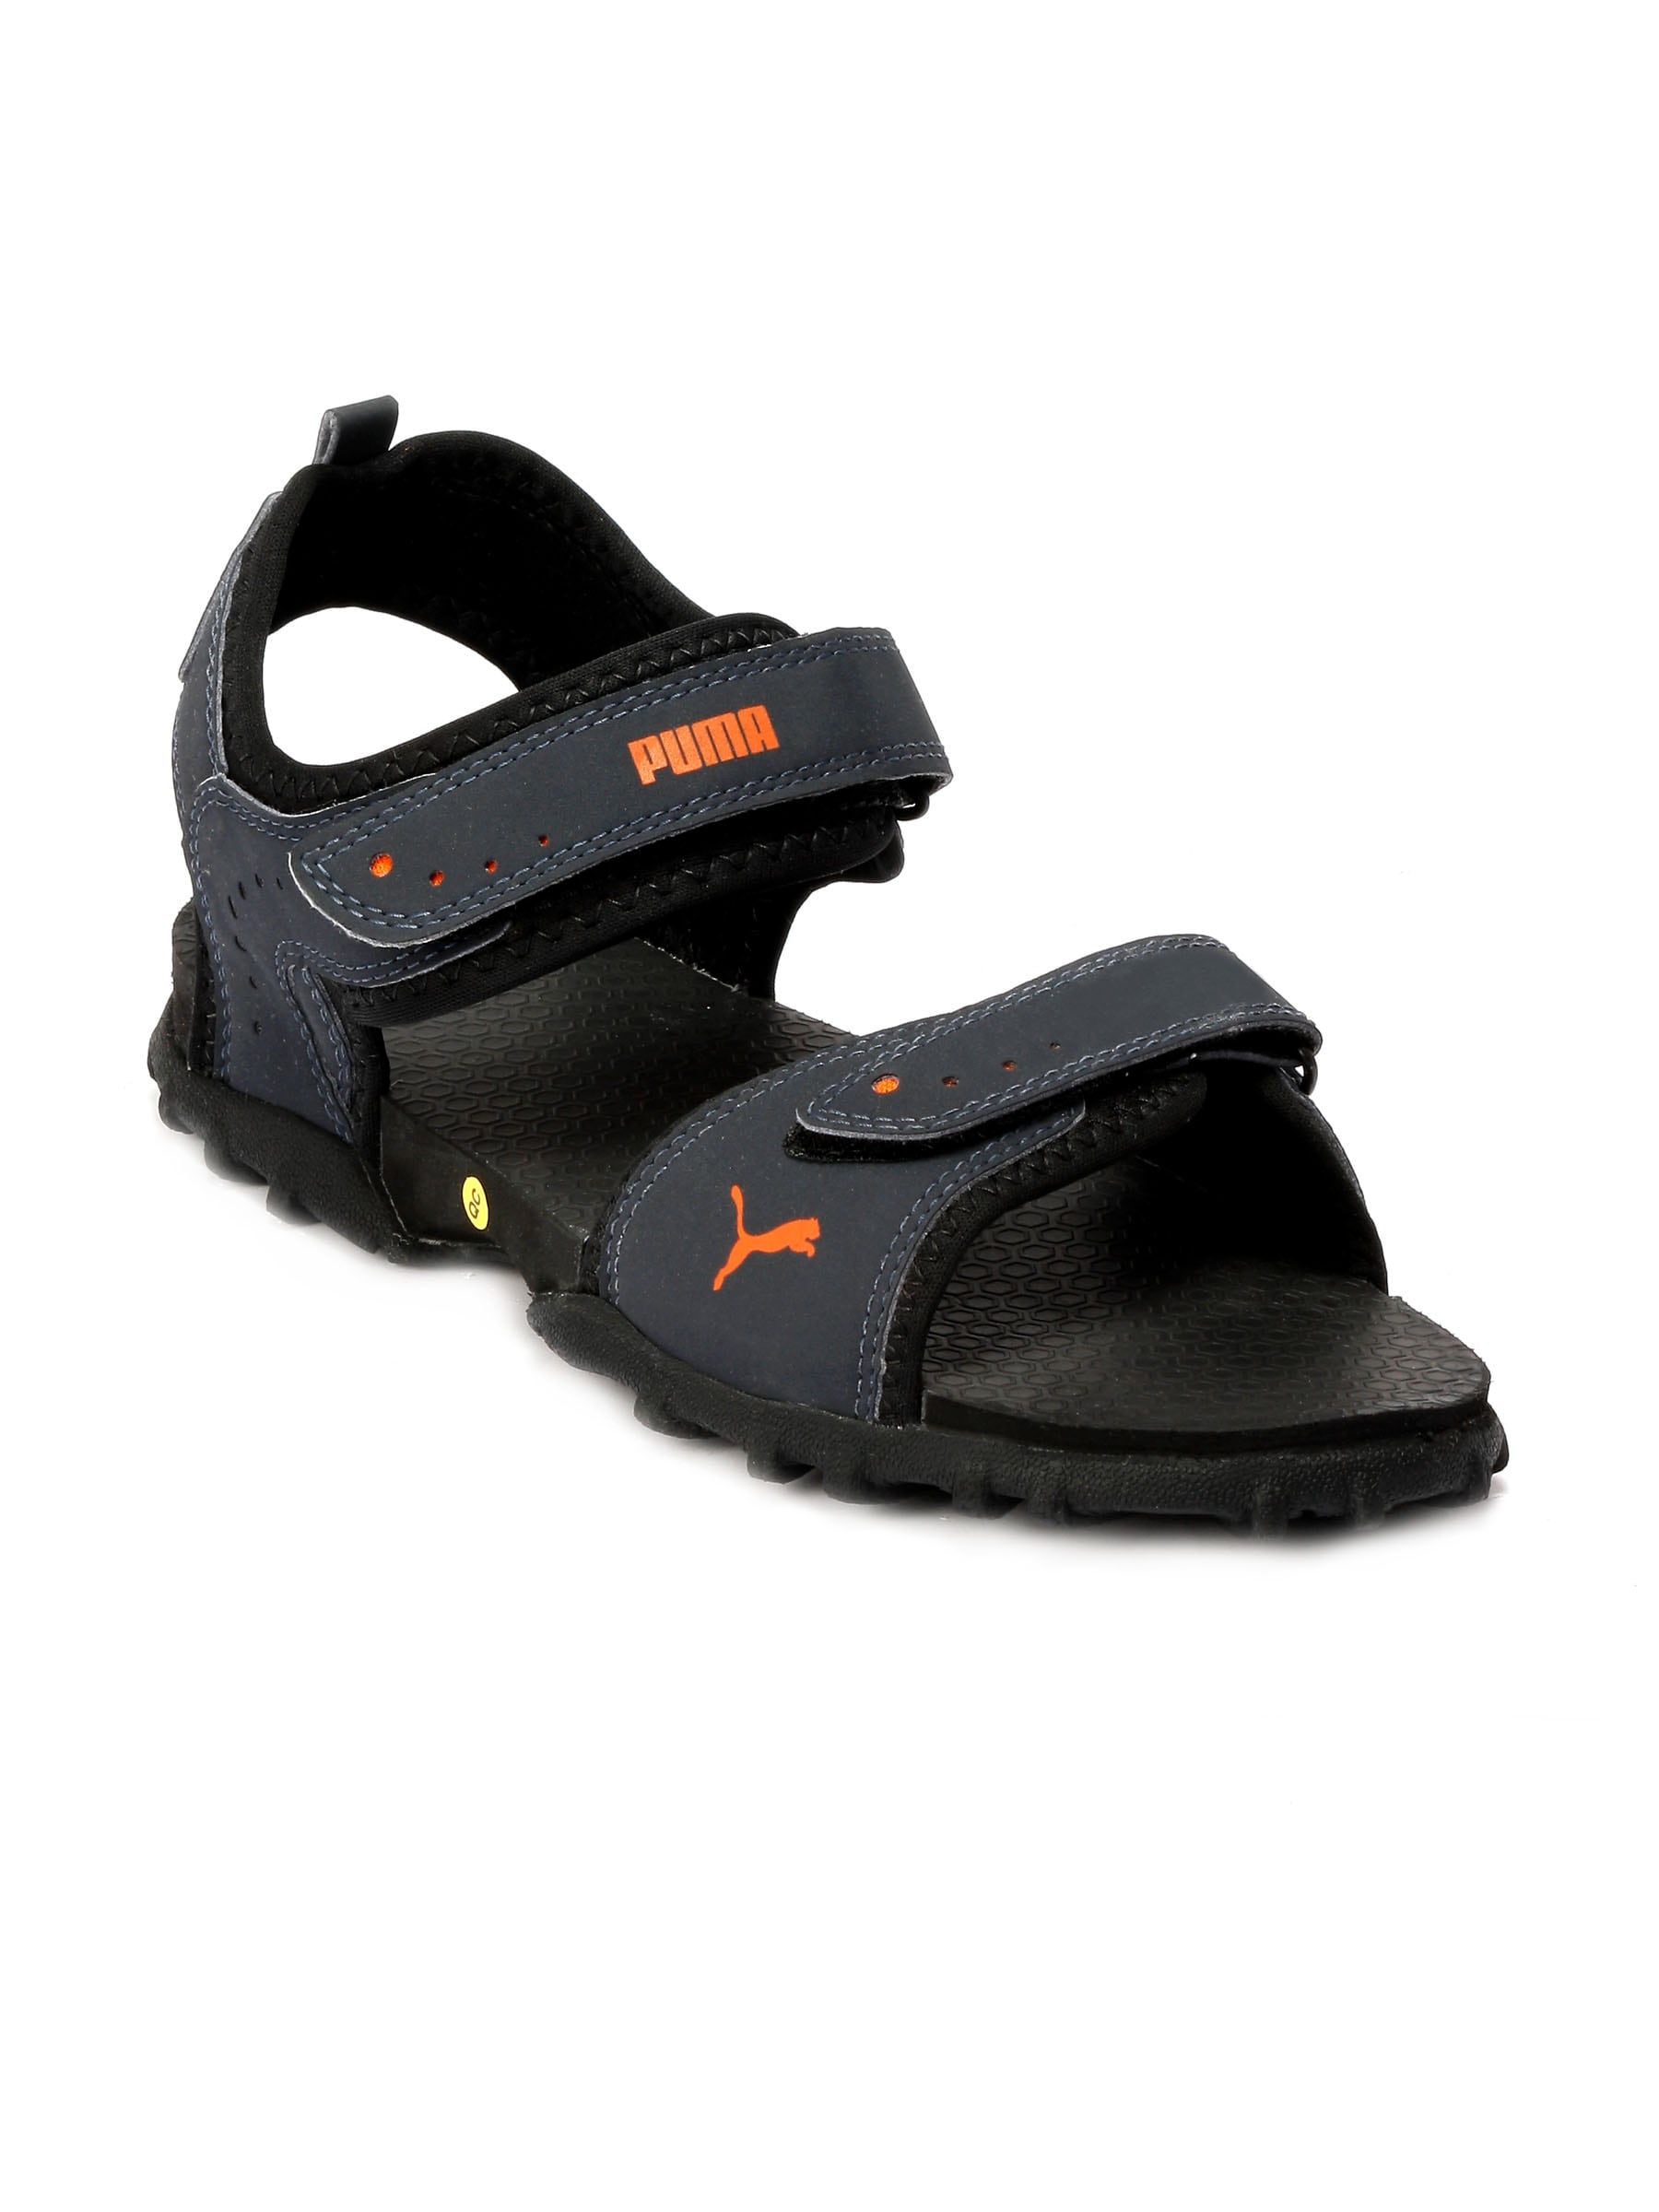 Puma Men Navy Blue & Orange Comfort Sandals